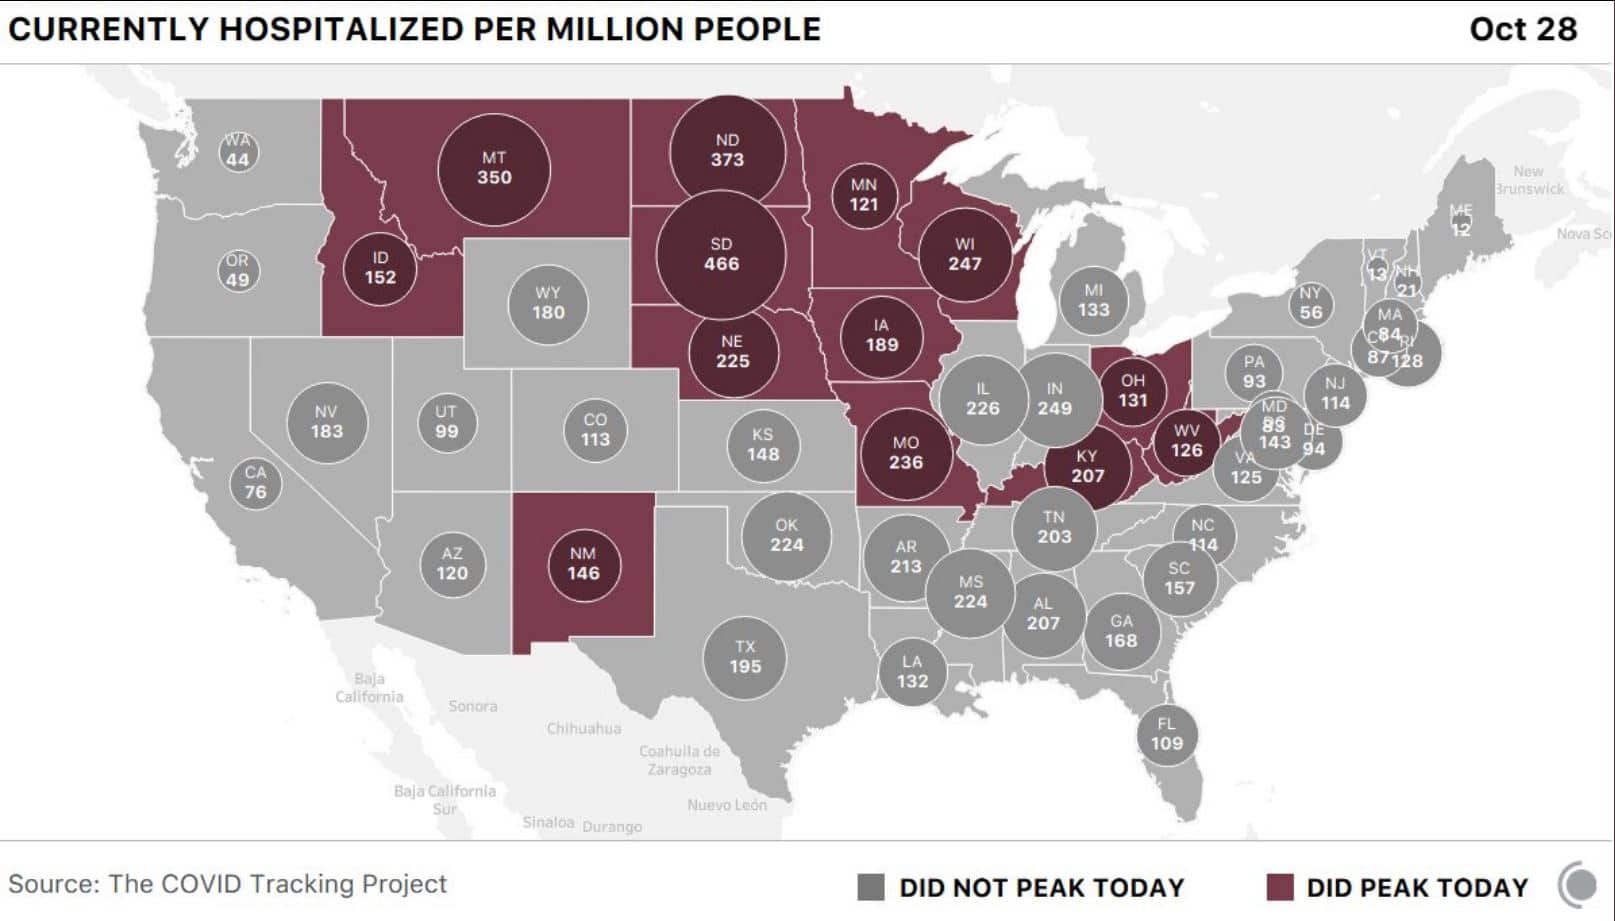 Current Covid hospitalizations per million people